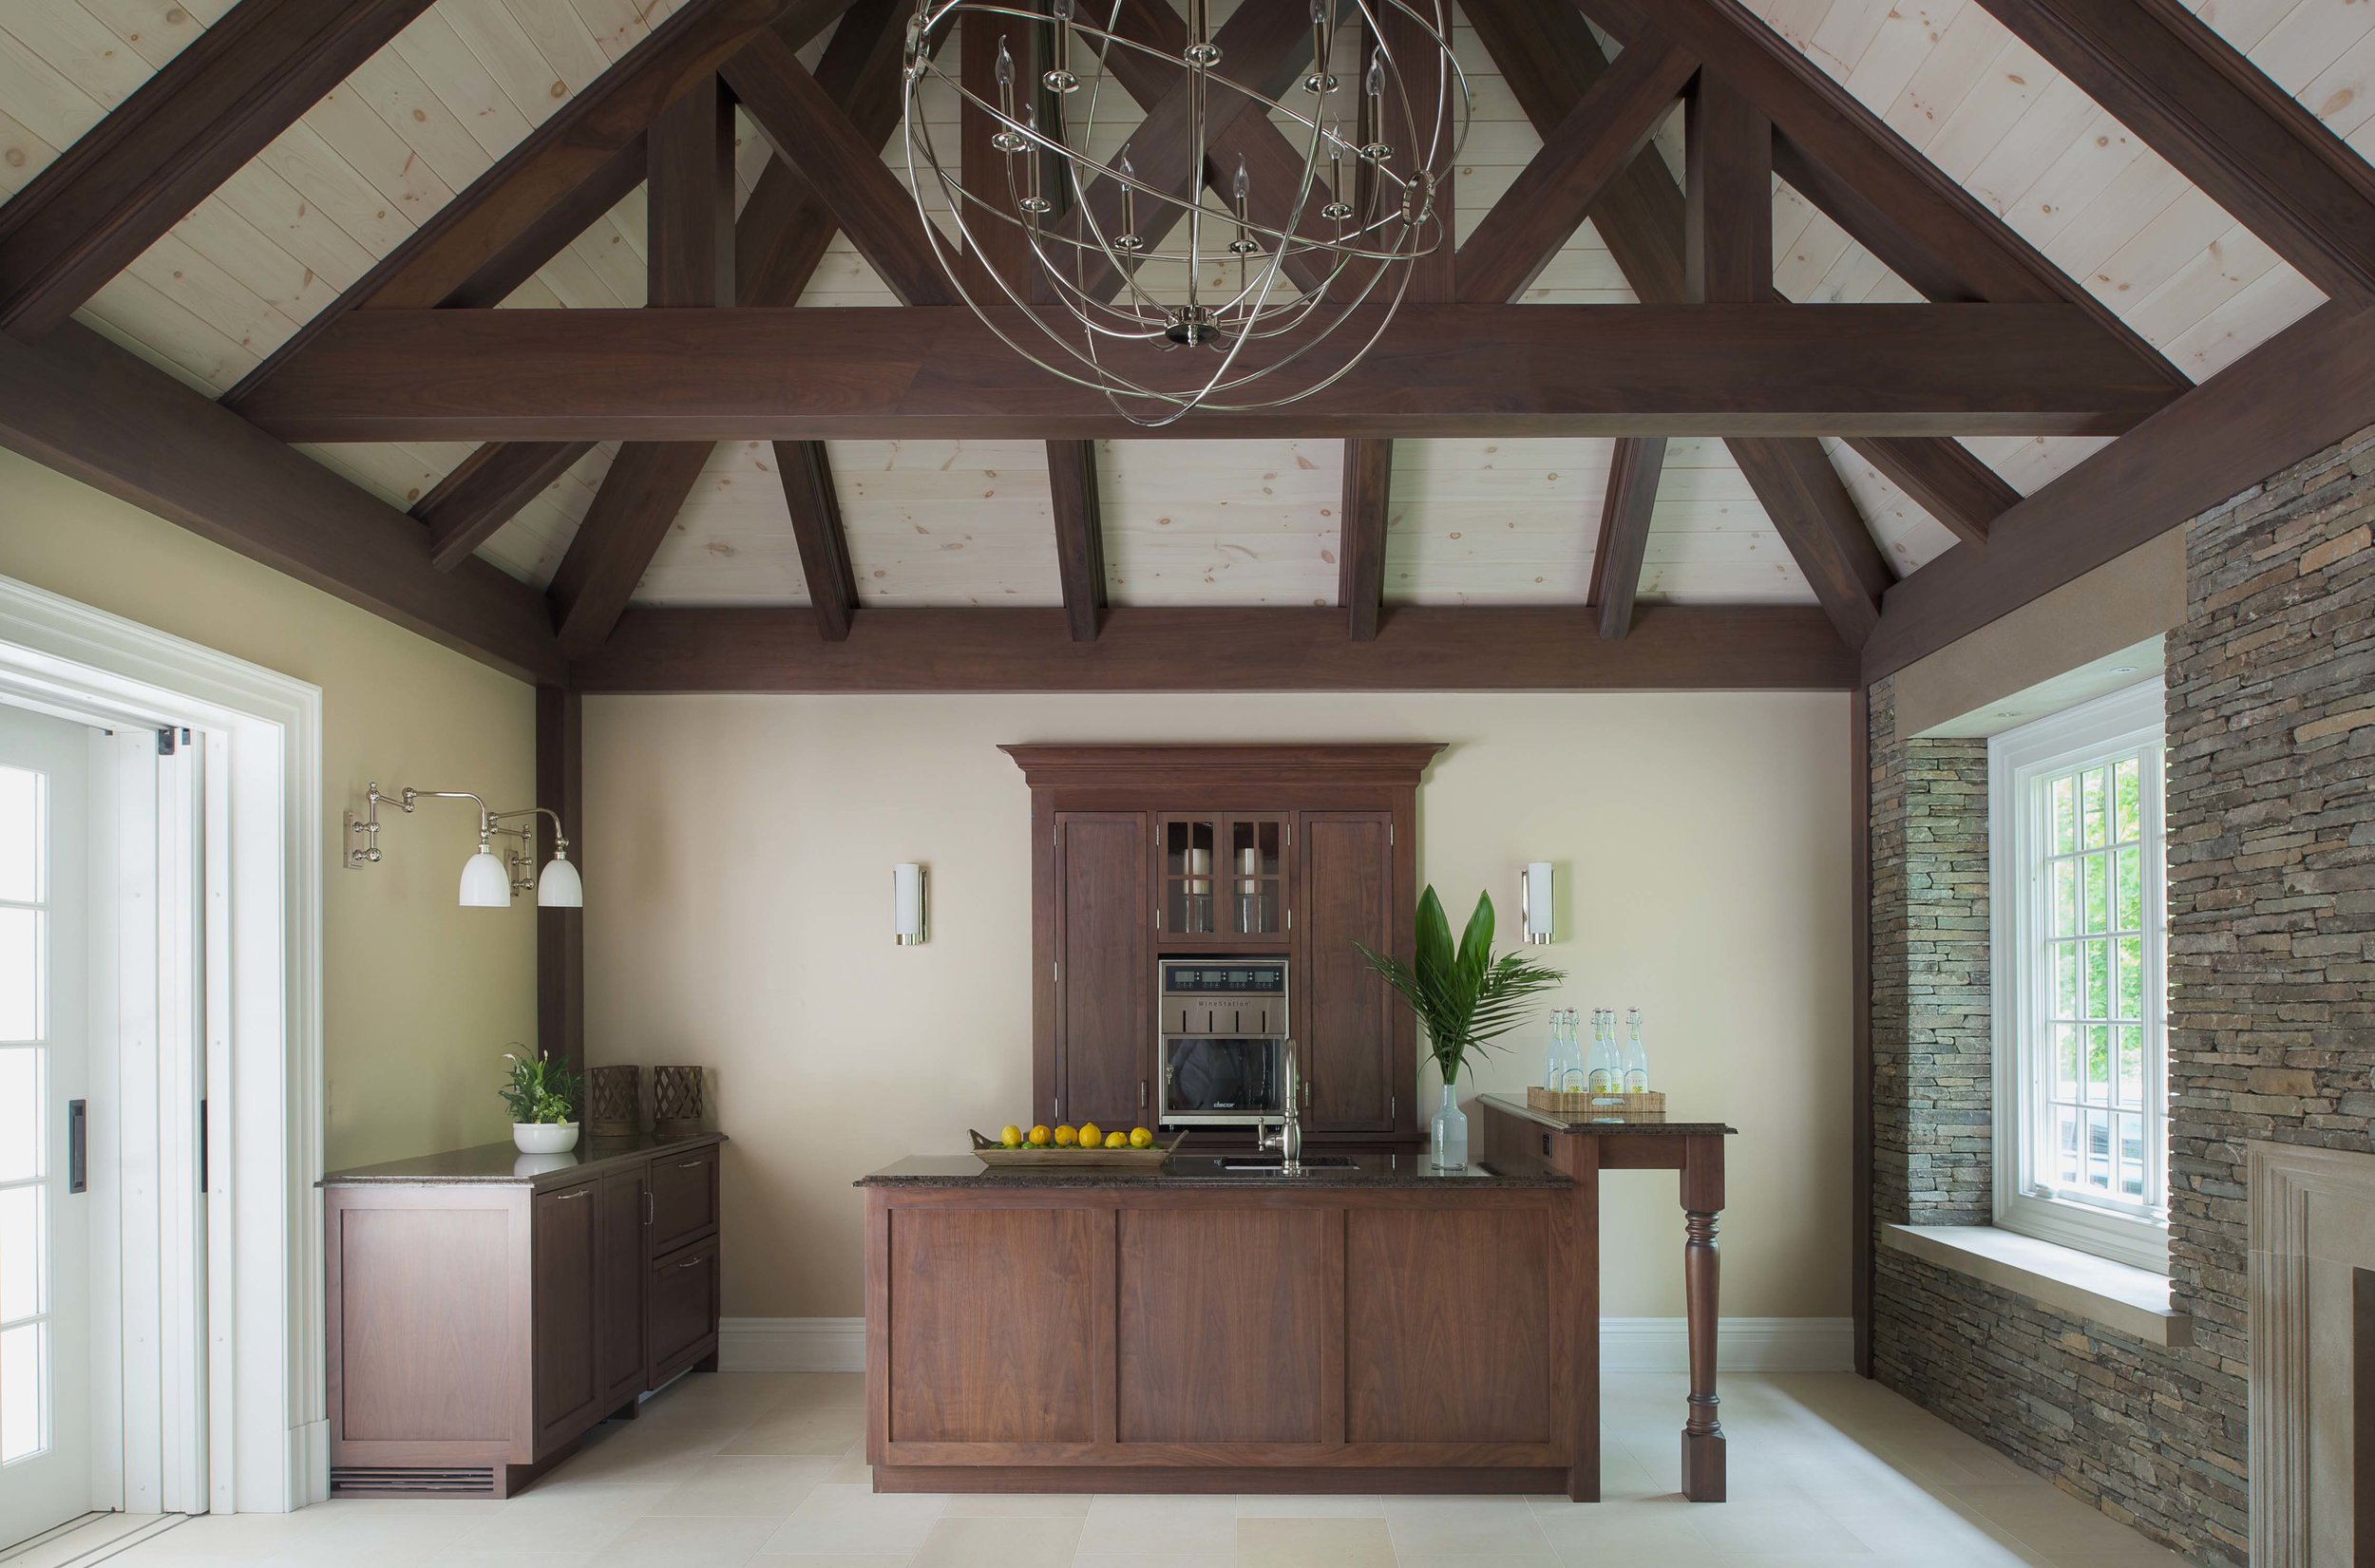 Interior, with custom walnut millwork and beams